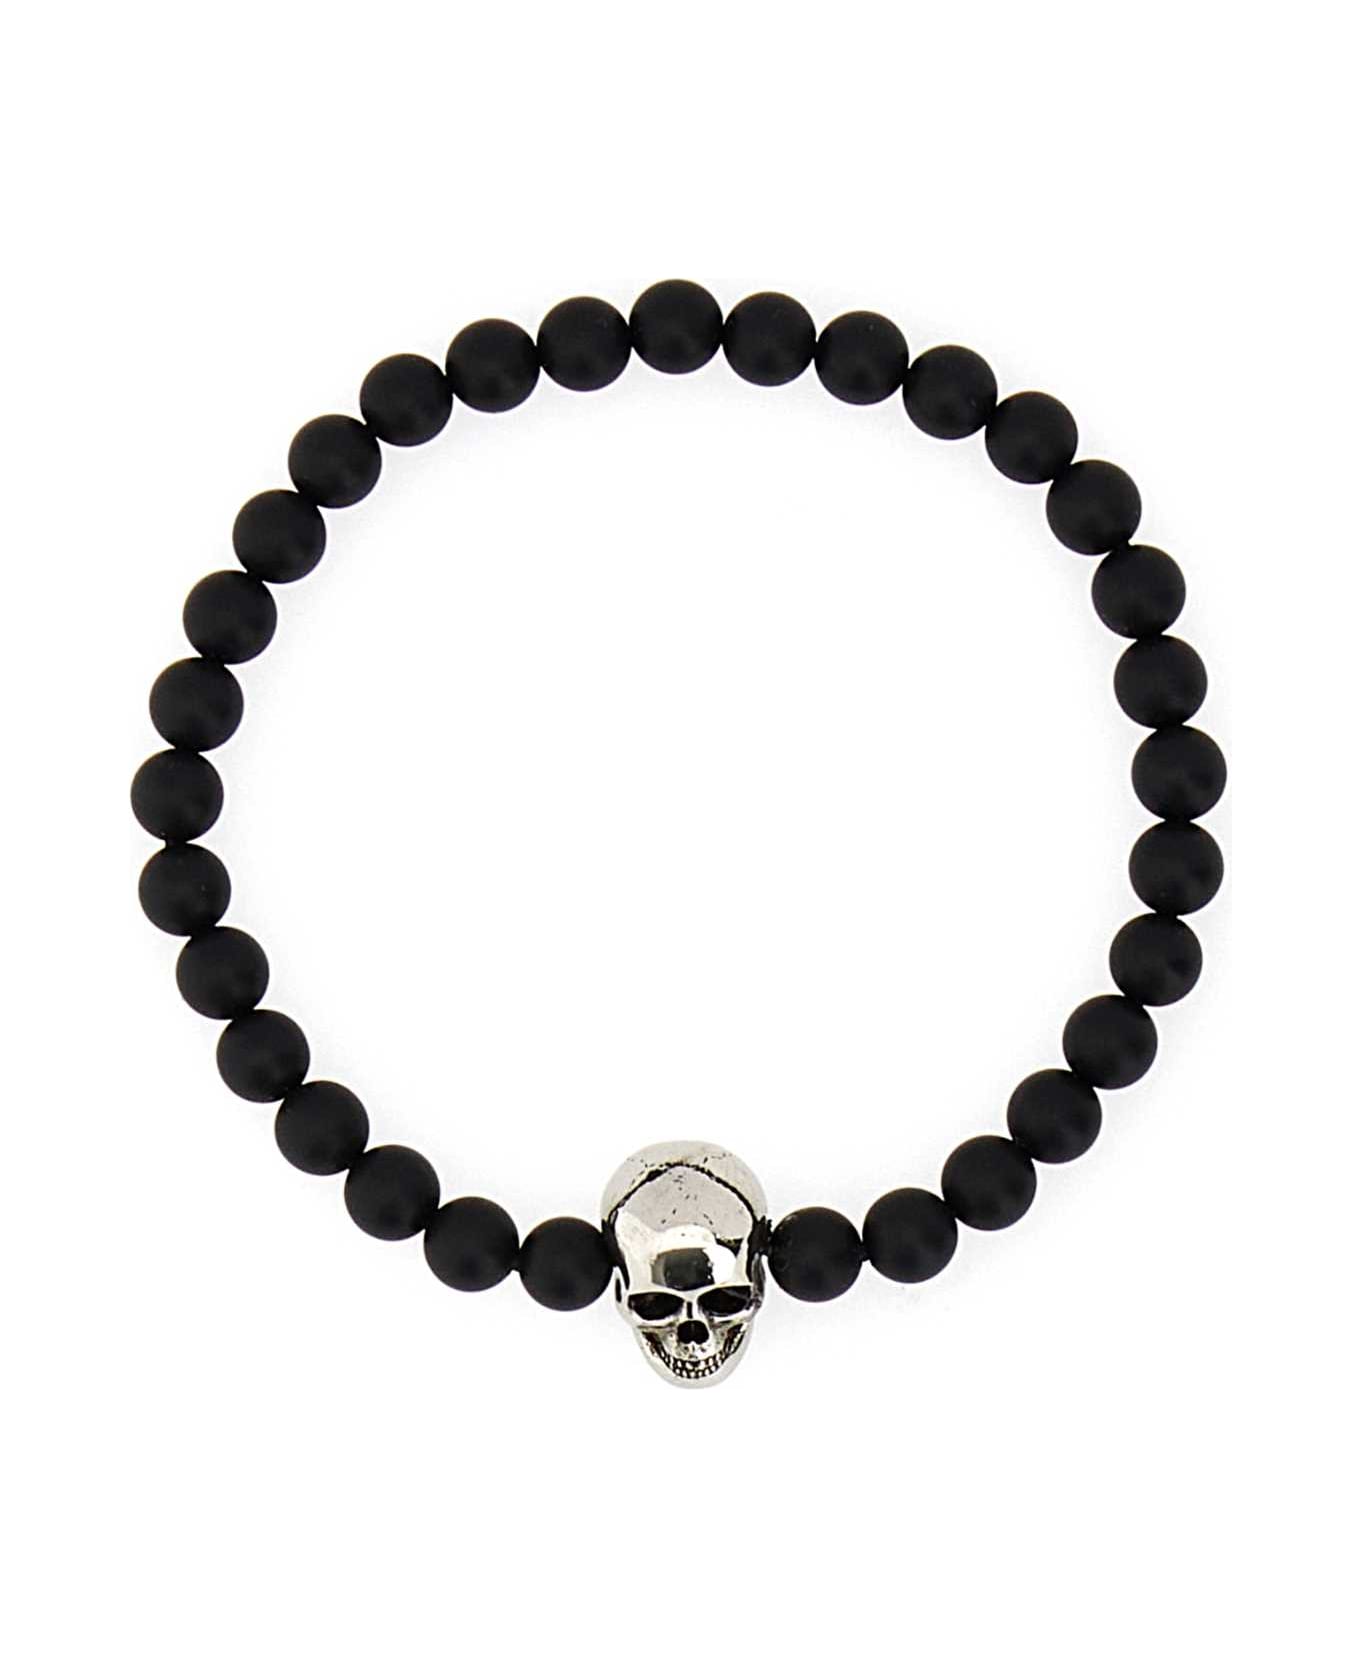 Alexander McQueen Black Beads Skull Bracelet - BLACKASILVER ブレスレット